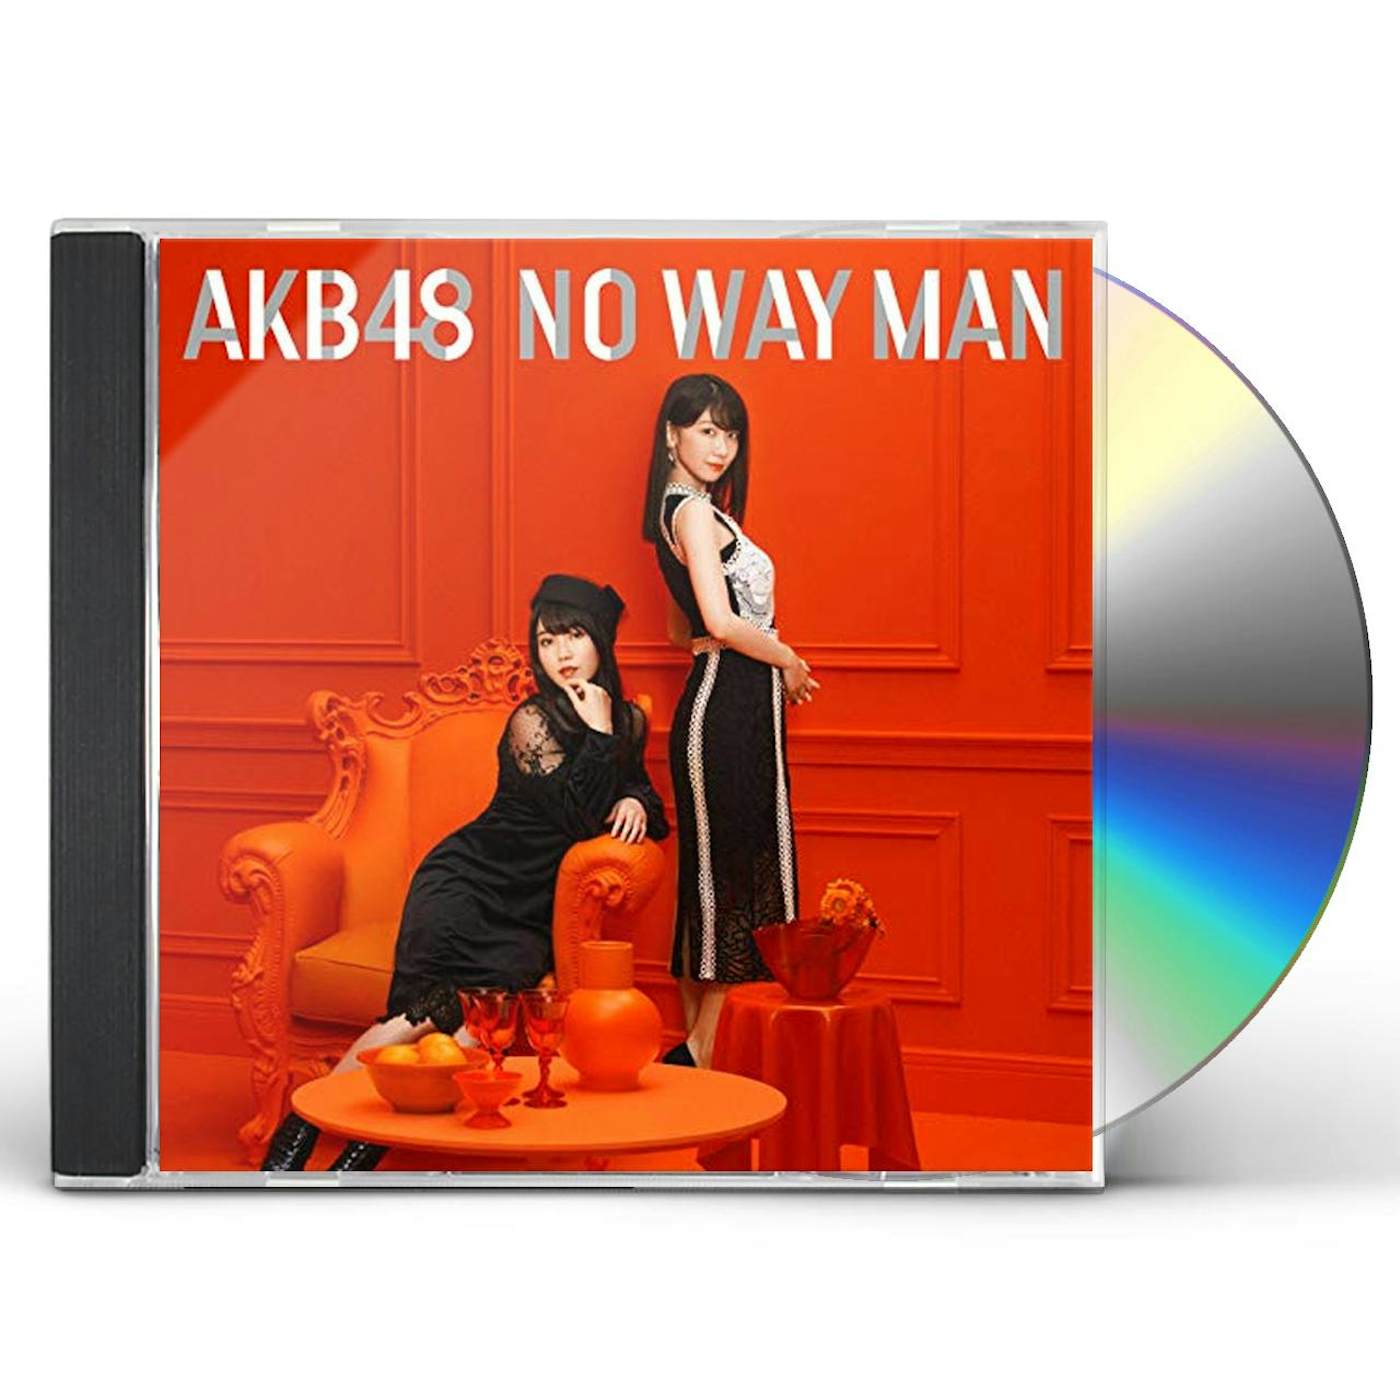 AKB48 NO WAY MAN (VERSION E) CD